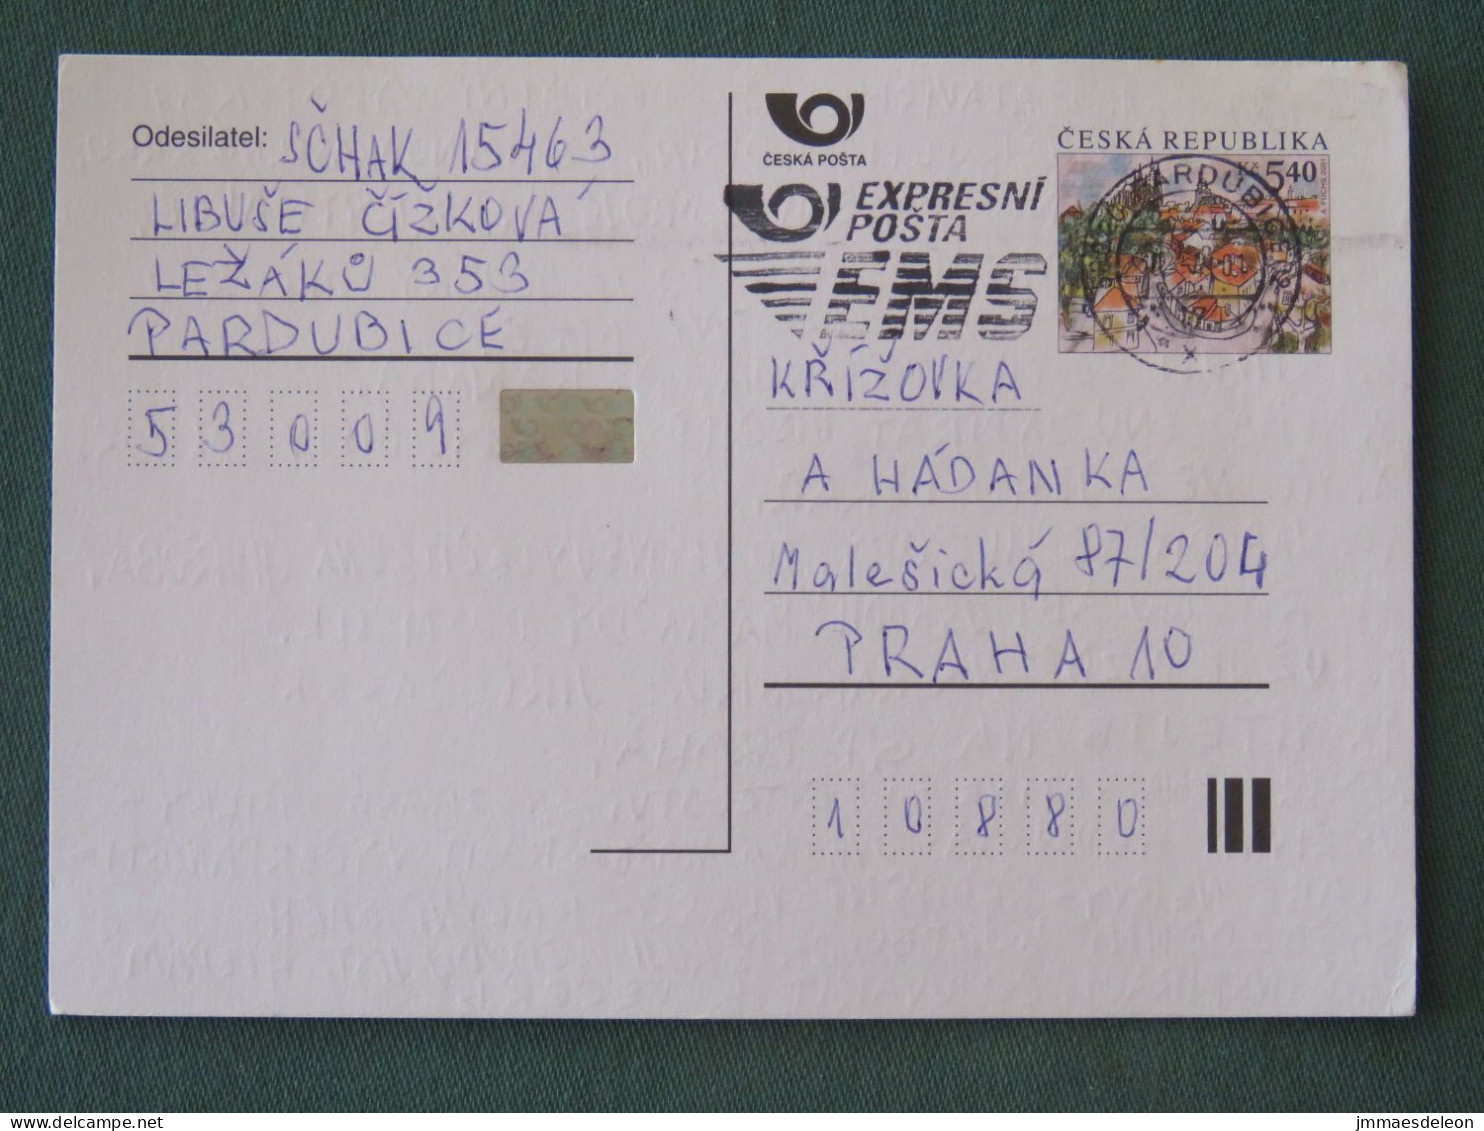 Czech Republic 2001 Stationery Postcard 5.40 Kcs Prague Sent Locally From Pardubice, EMS Slogan - Briefe U. Dokumente